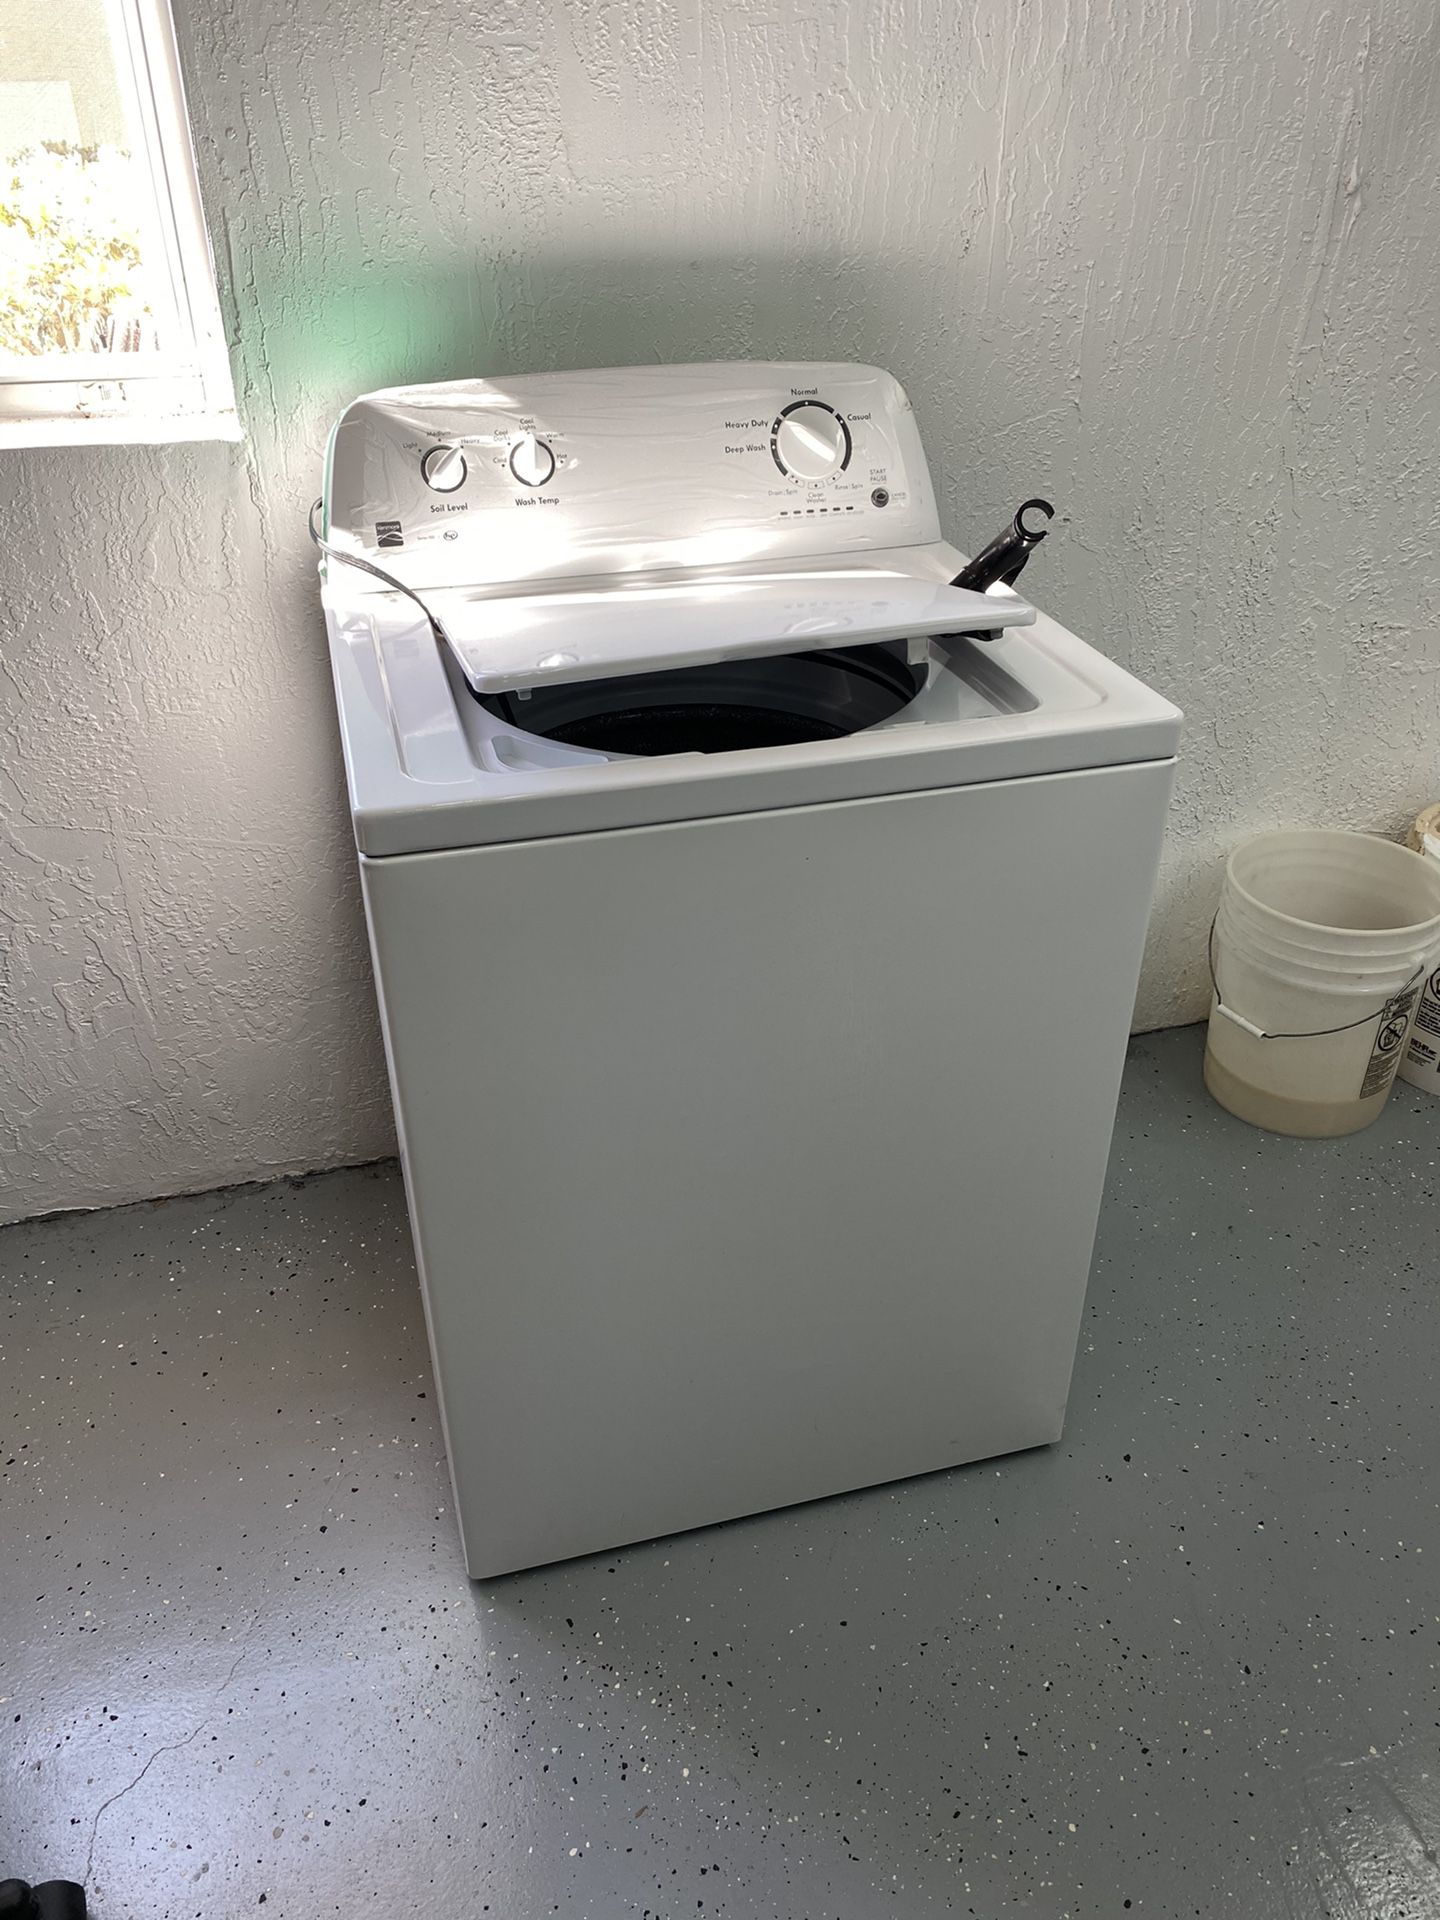 Kenmore Series 100 Washer